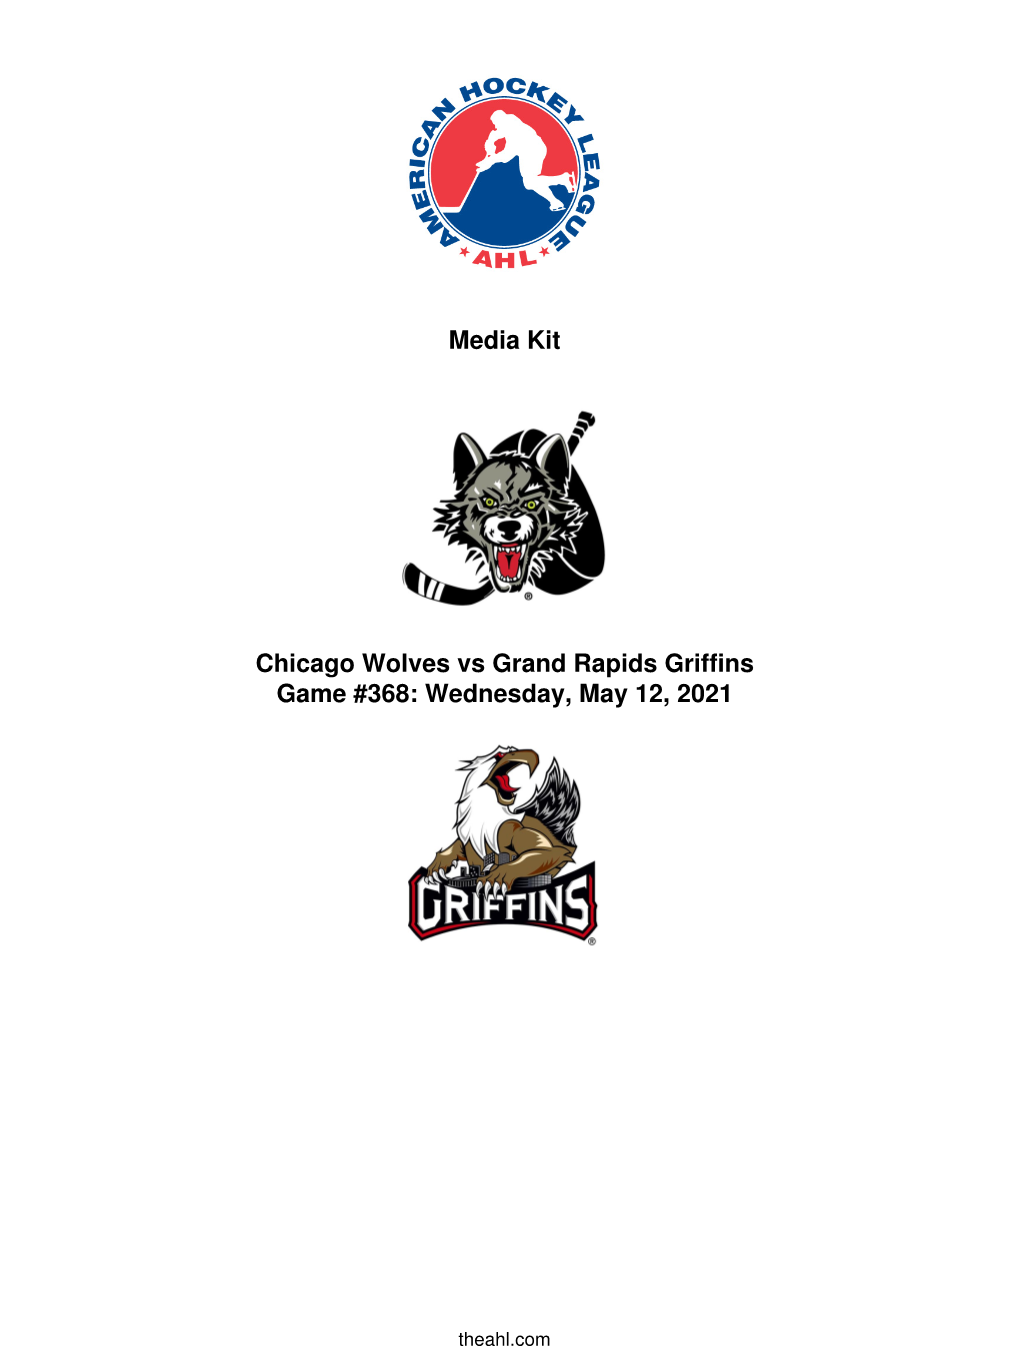 Media Kit Chicago Wolves Vs Grand Rapids Griffins Game #368